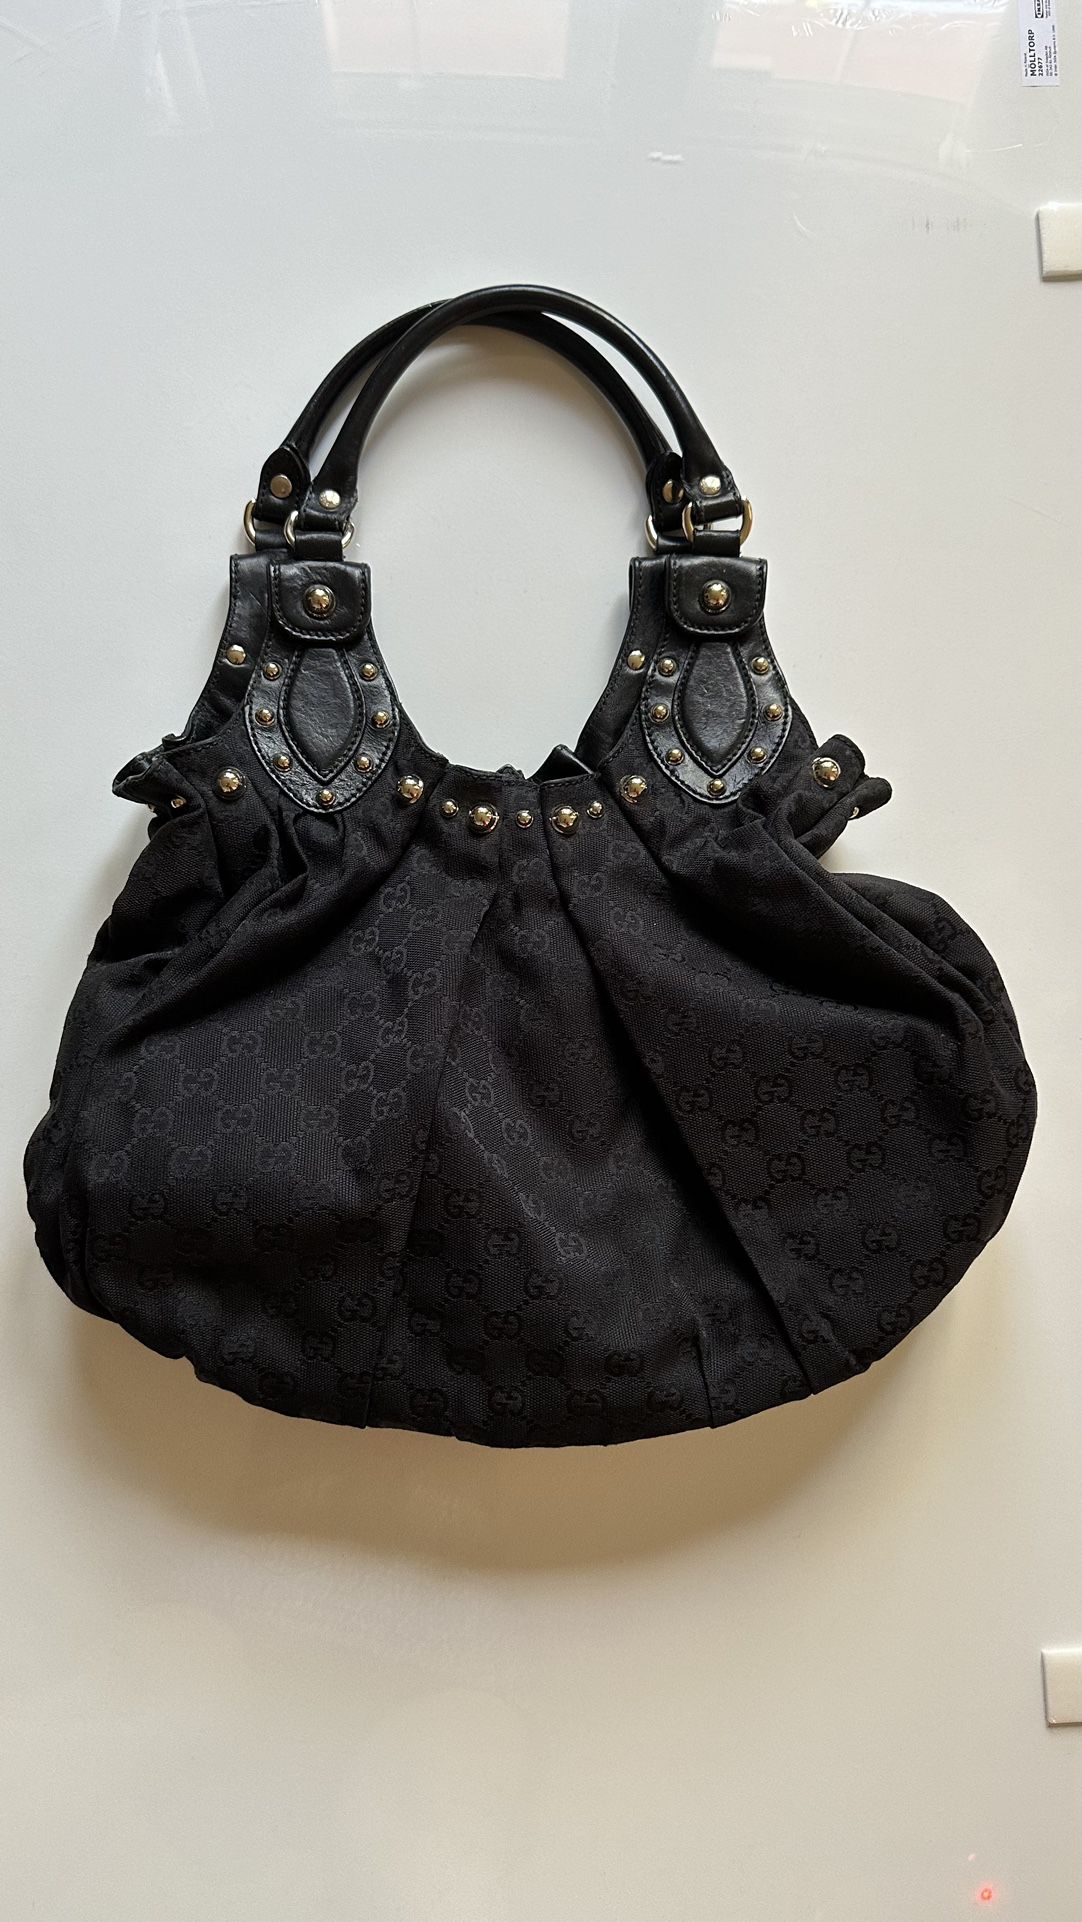 Authentic Gucci Pelham Studded Black Bag